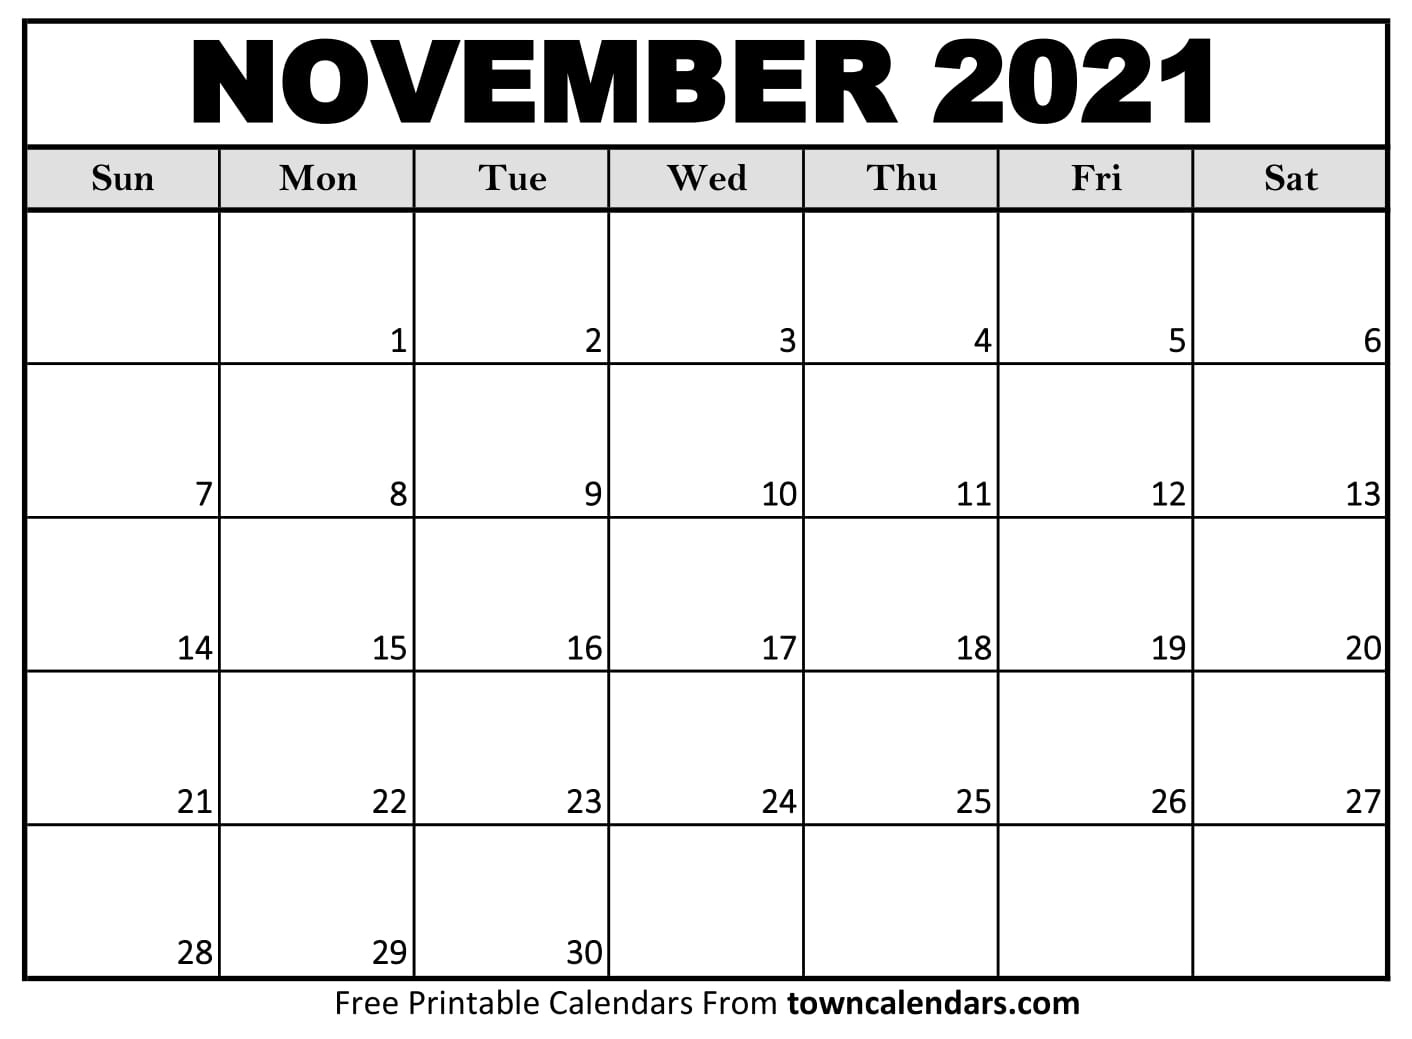 Printable November 2021 Calendar - Towncalendars 2021 Calendar November Festival